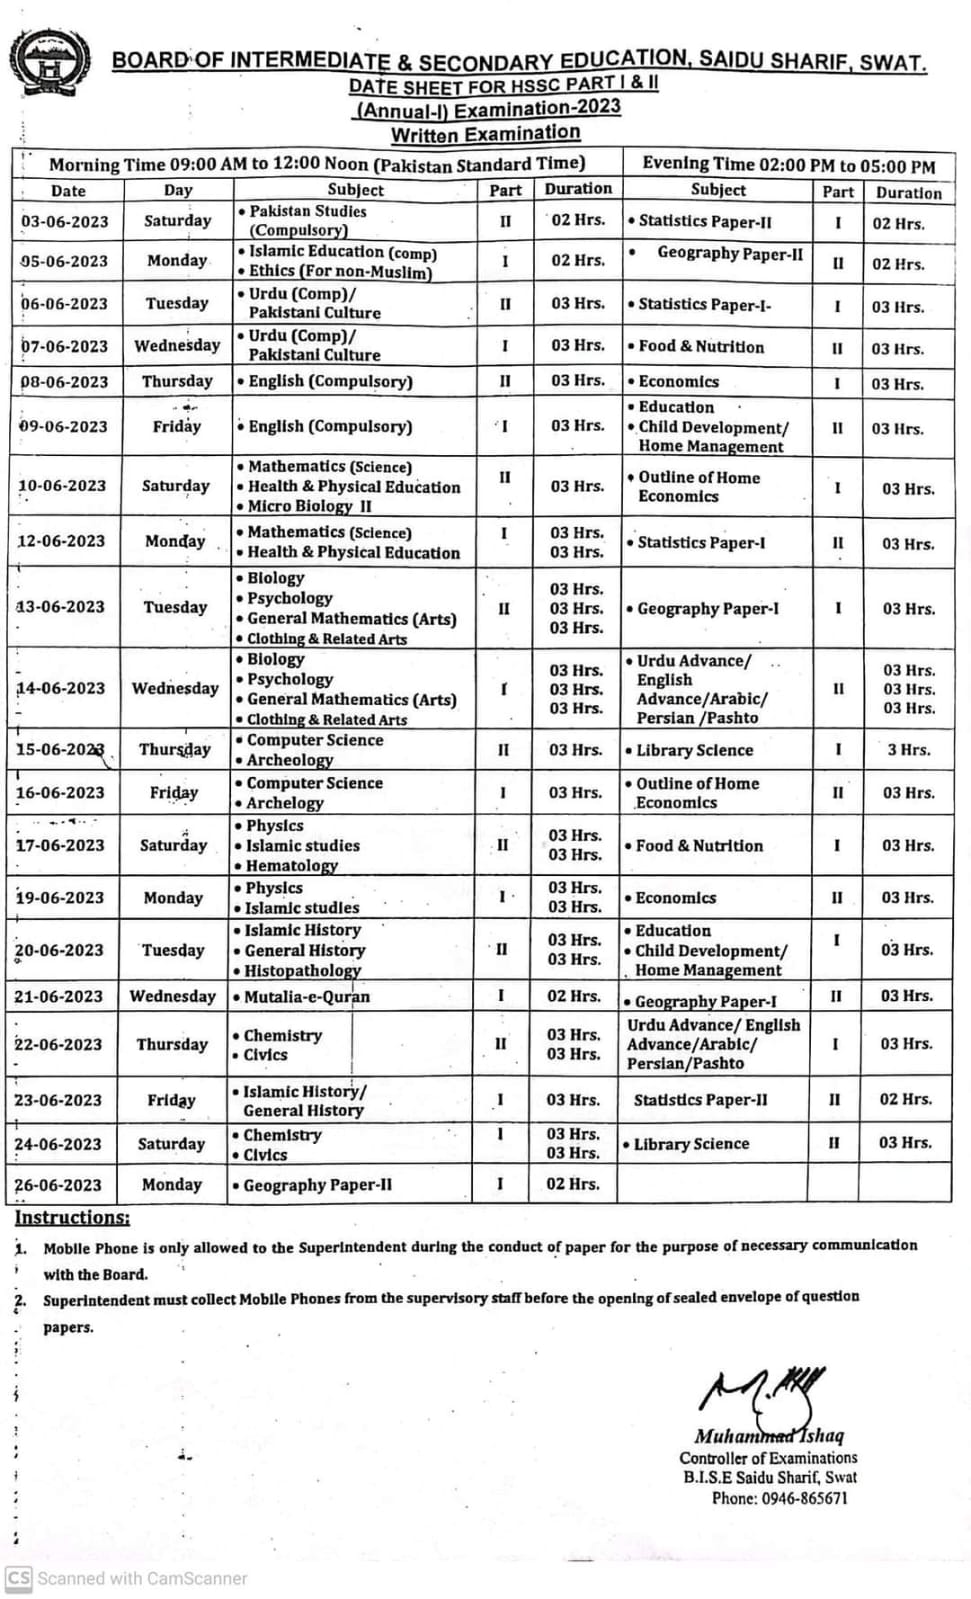 BISE Swat Board FA Fsc Date sheet 2023 annual exams